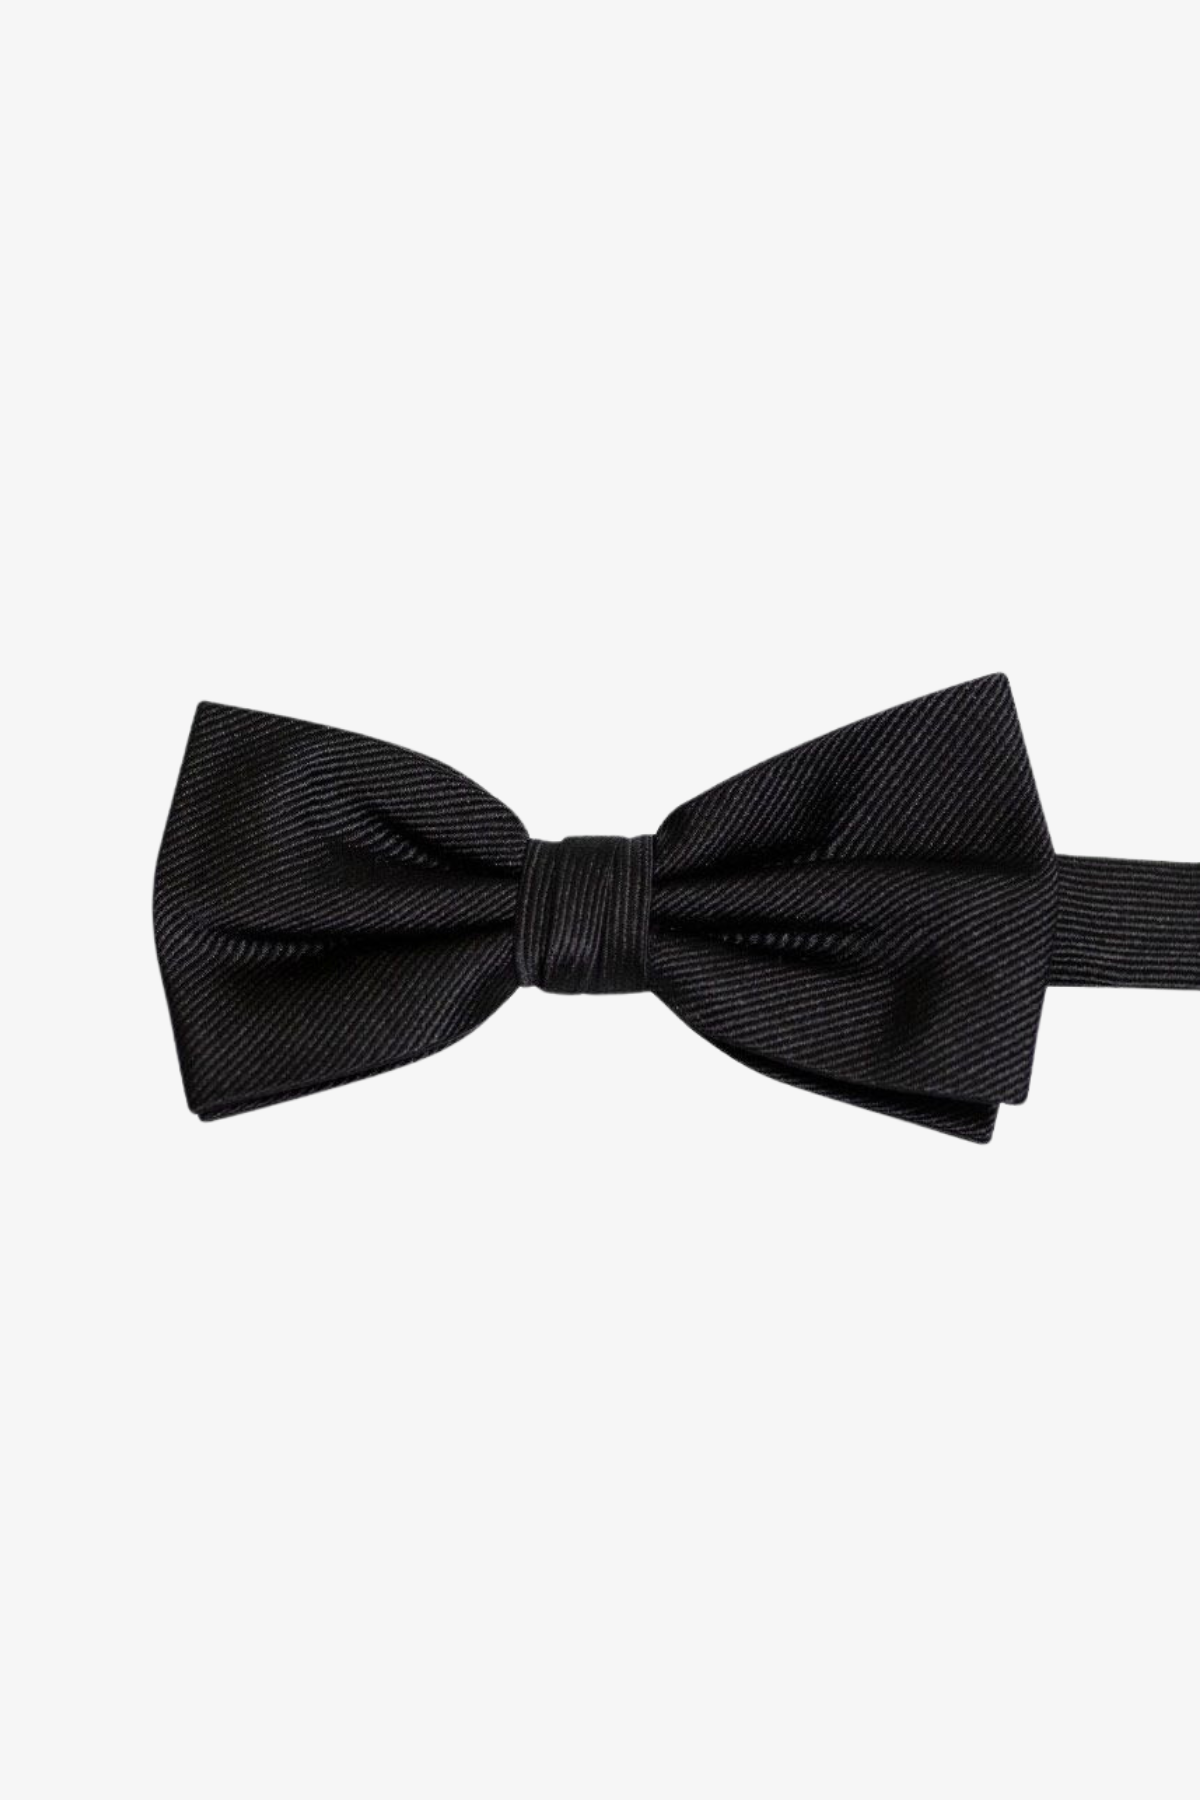 Bow tie - Black Satin